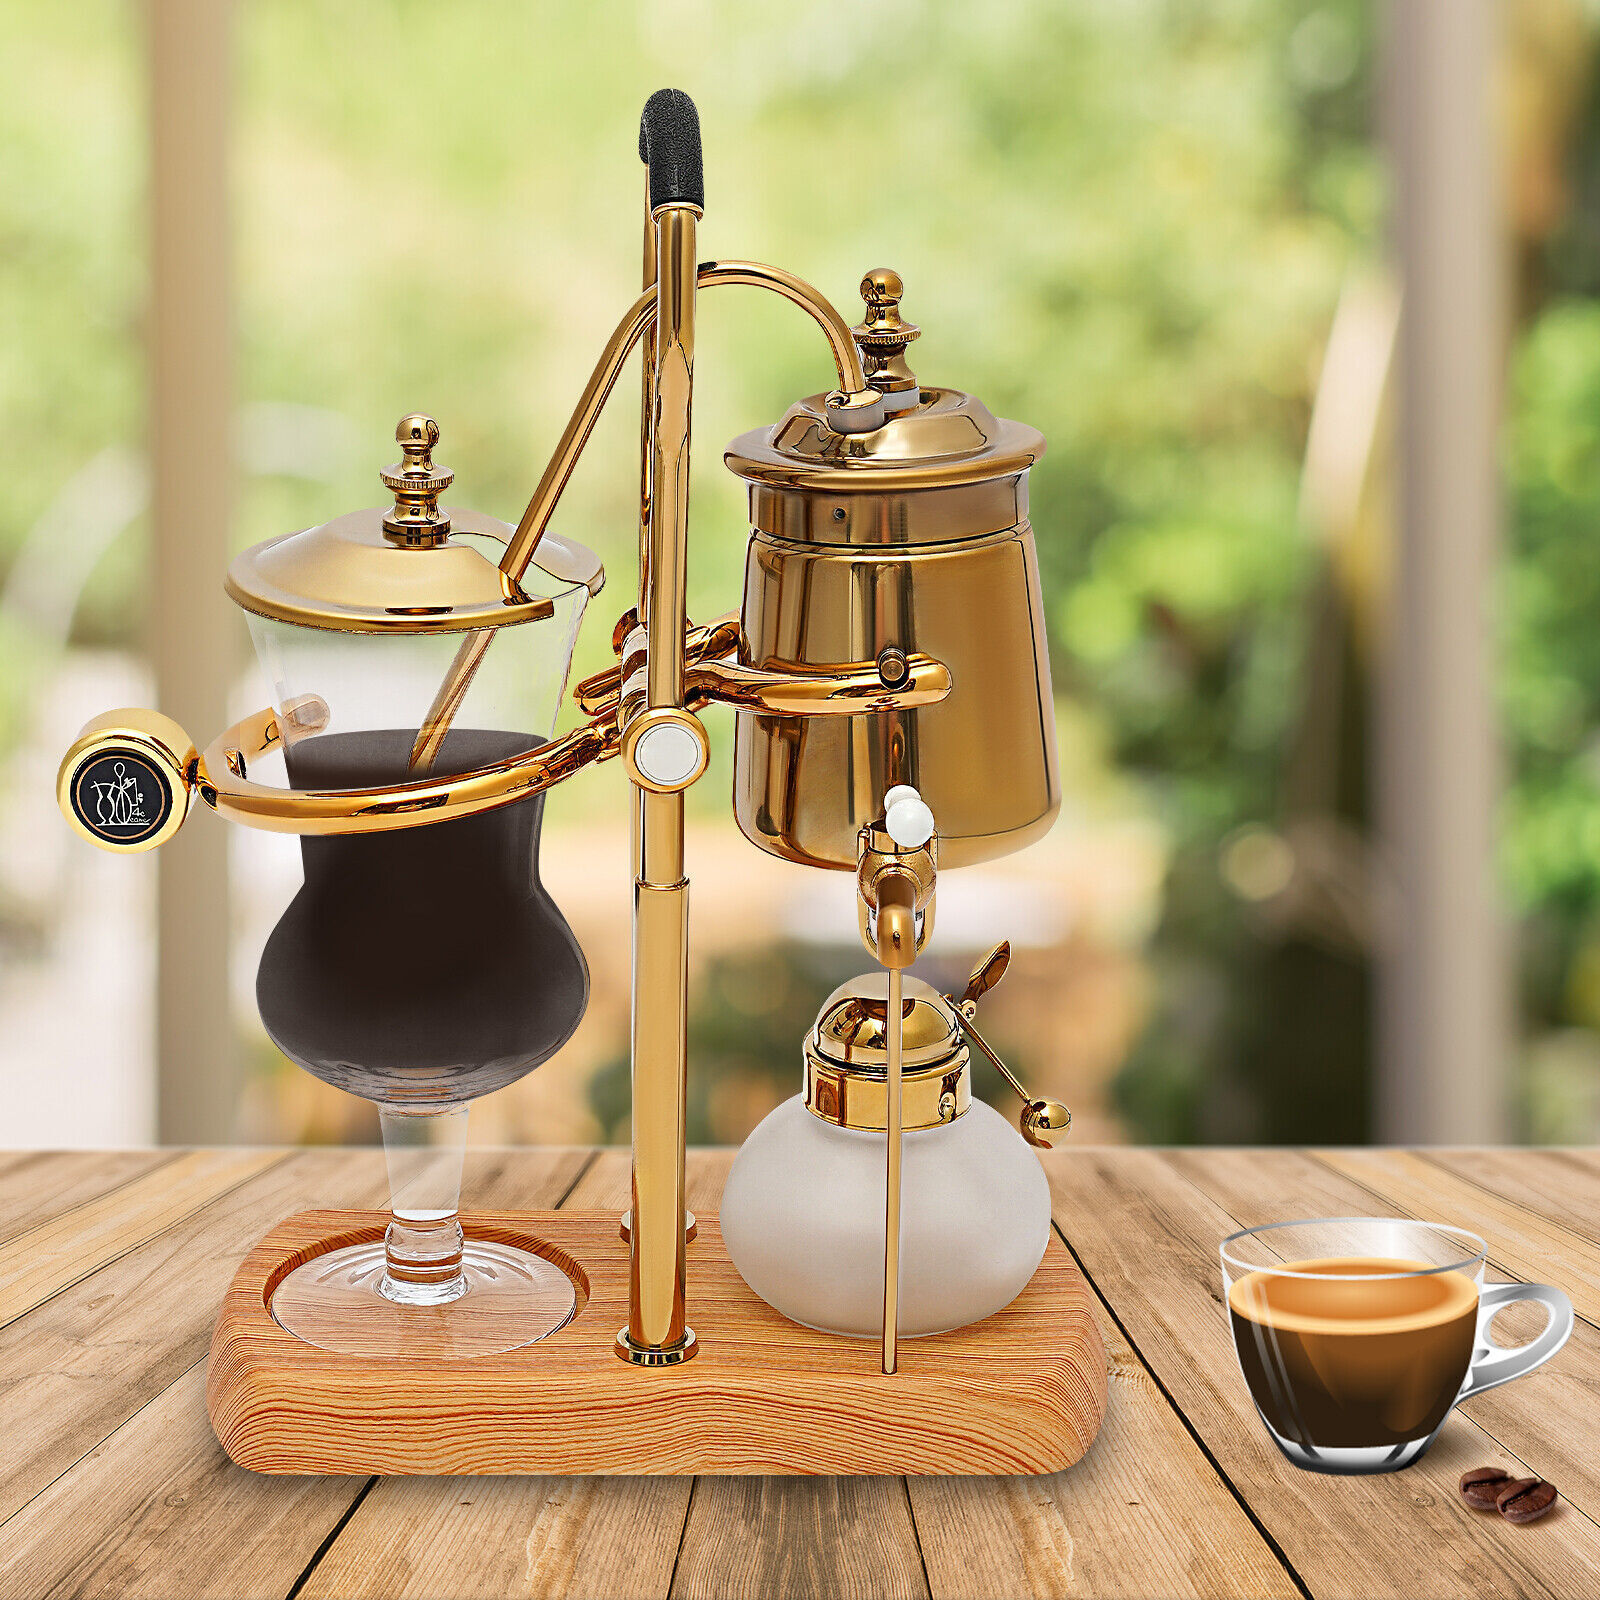 Retro Coffe Maker Belgian Belgium Luxury Royal Family Balance Syphon Coffee Make